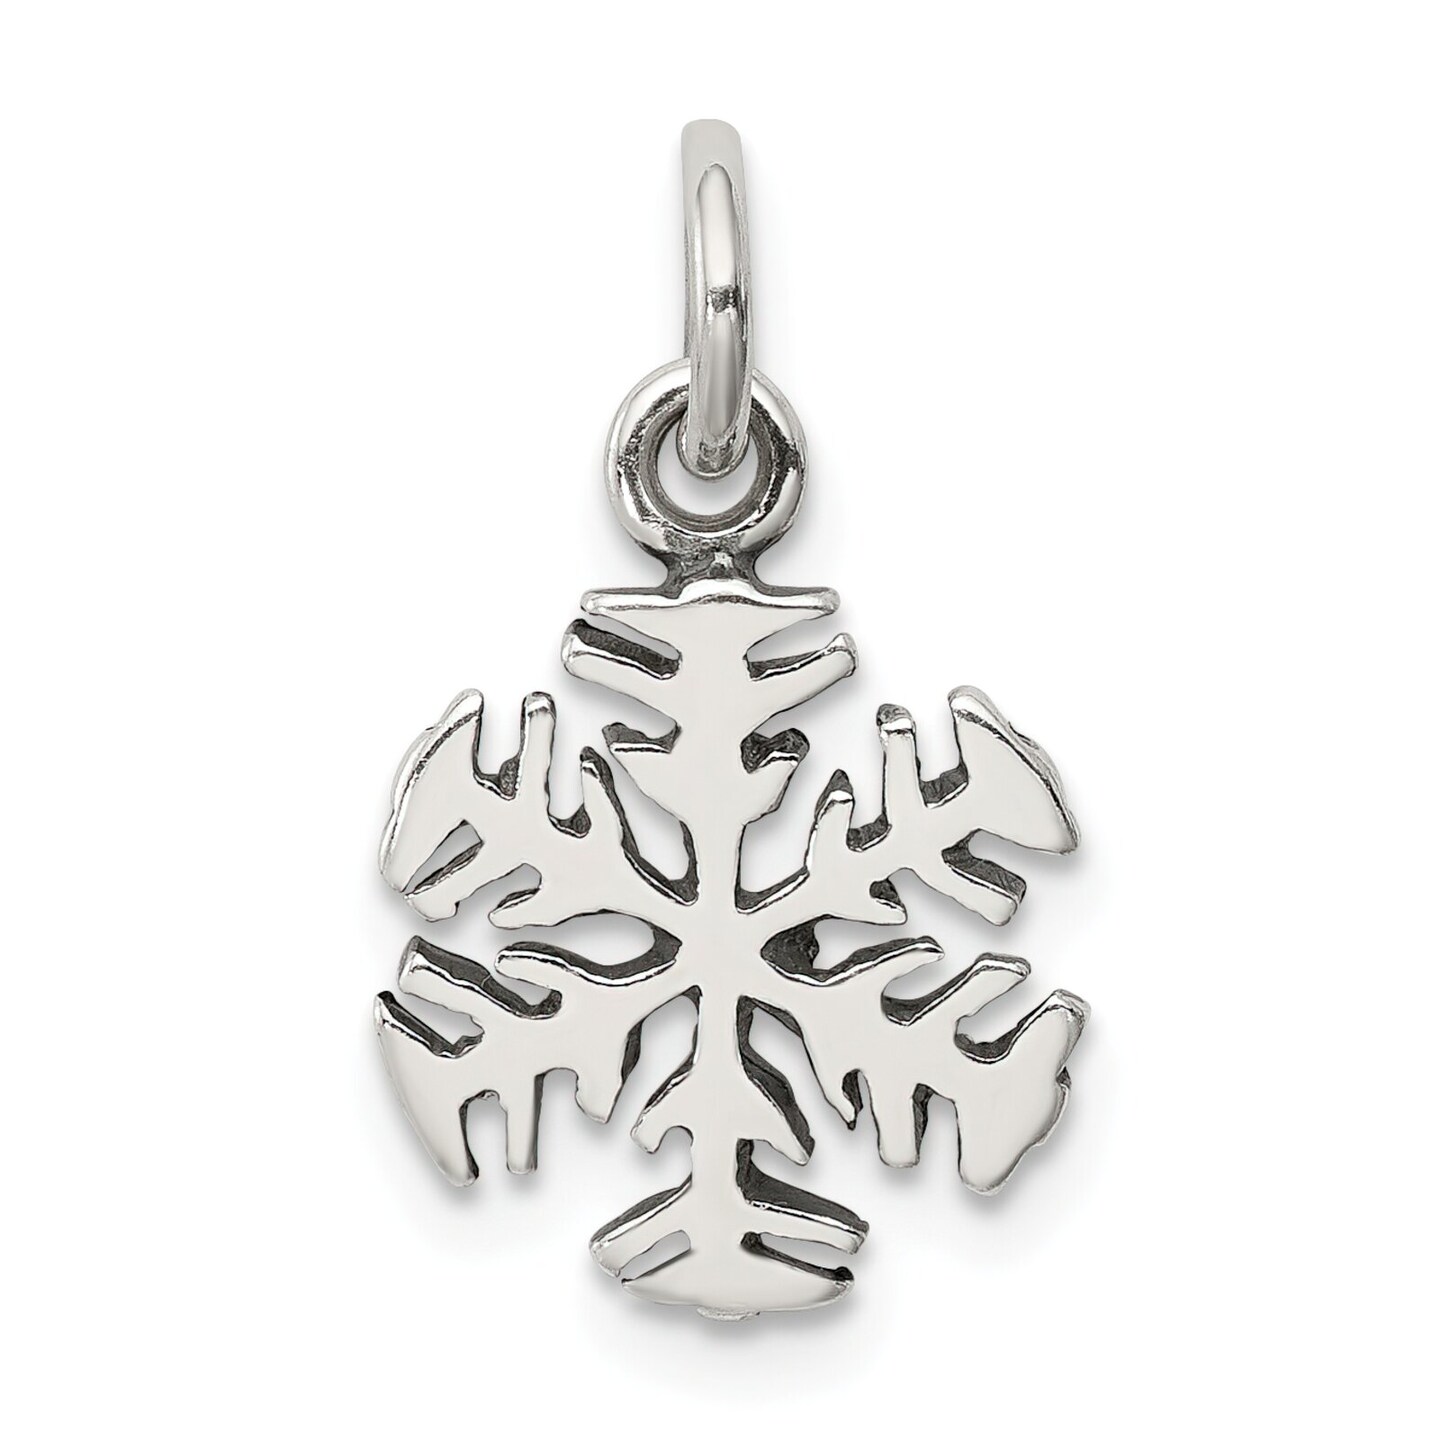 Snowflake Charm Sterling Silver